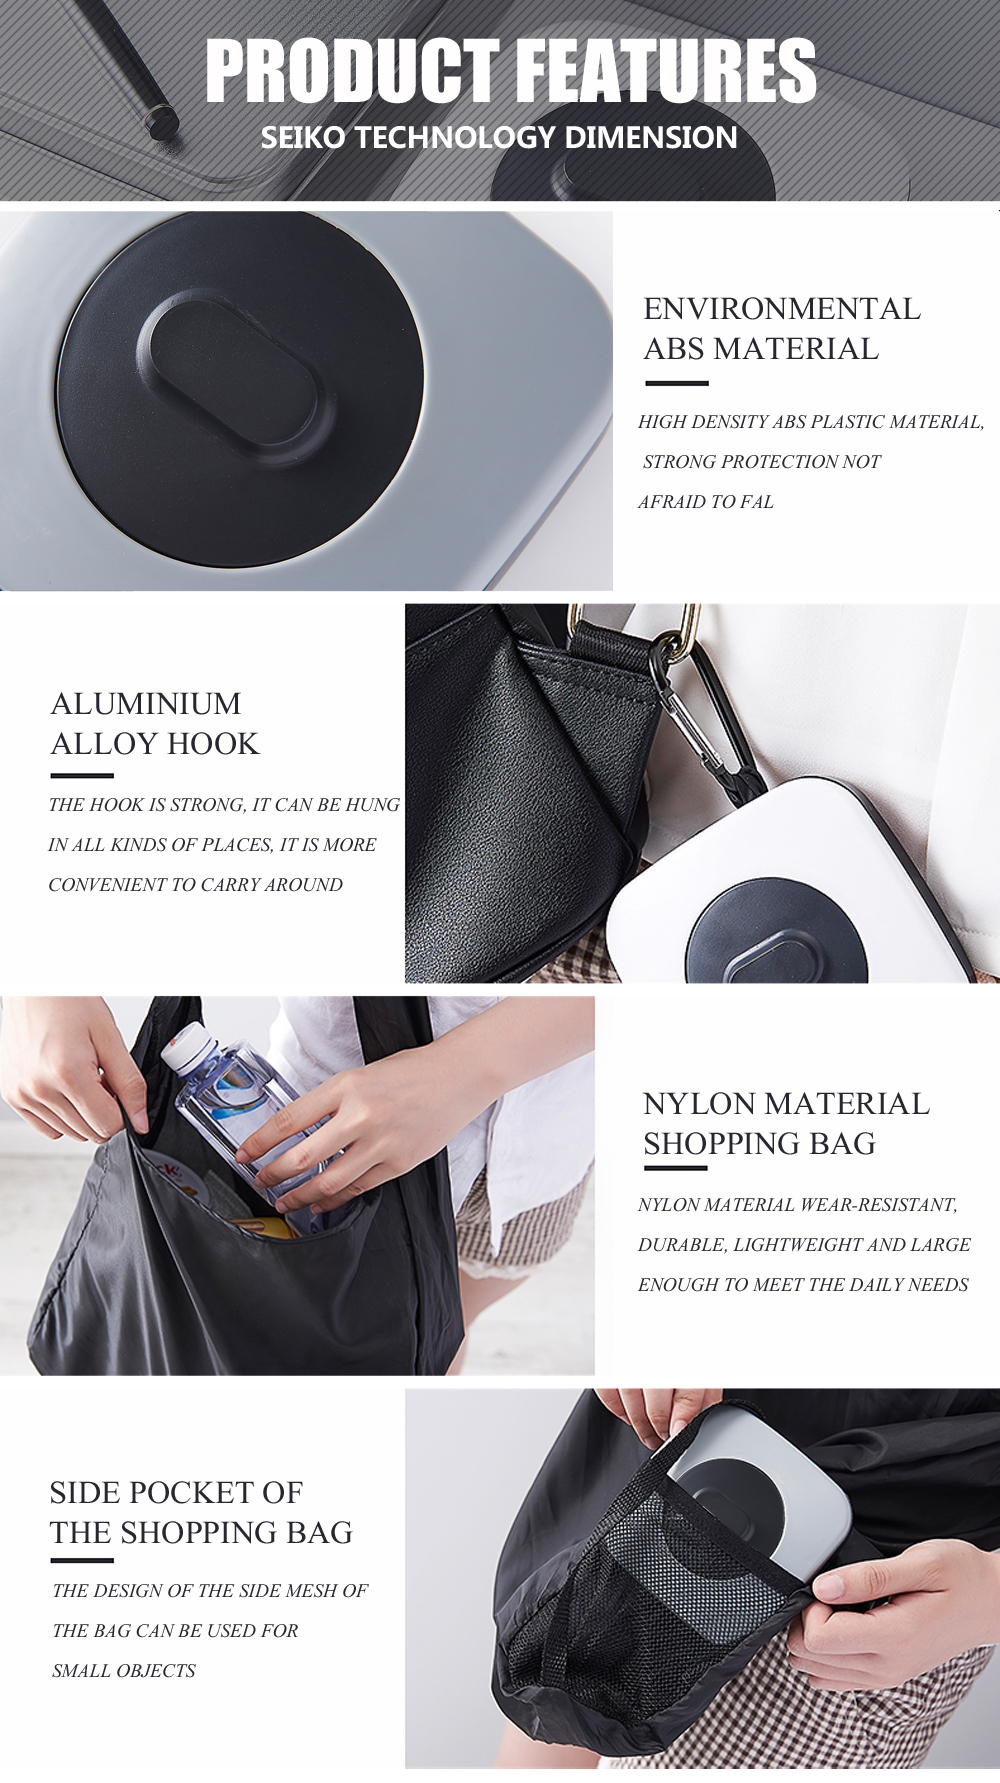 Creative Rotating Square Portable Reusable Shopping Bag